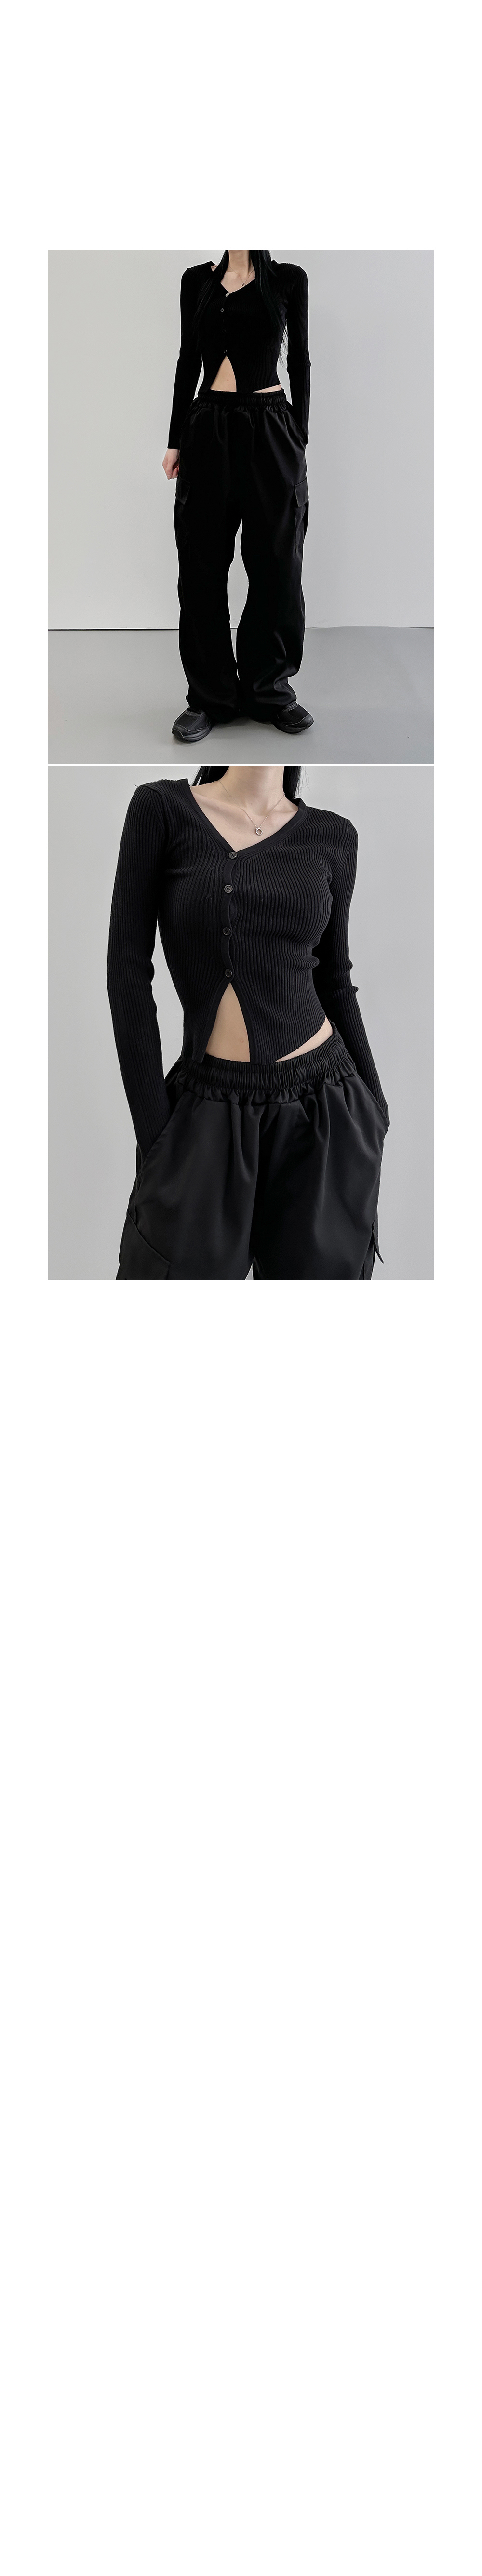 suspenders skirt/pants charcoal color image-S1L7